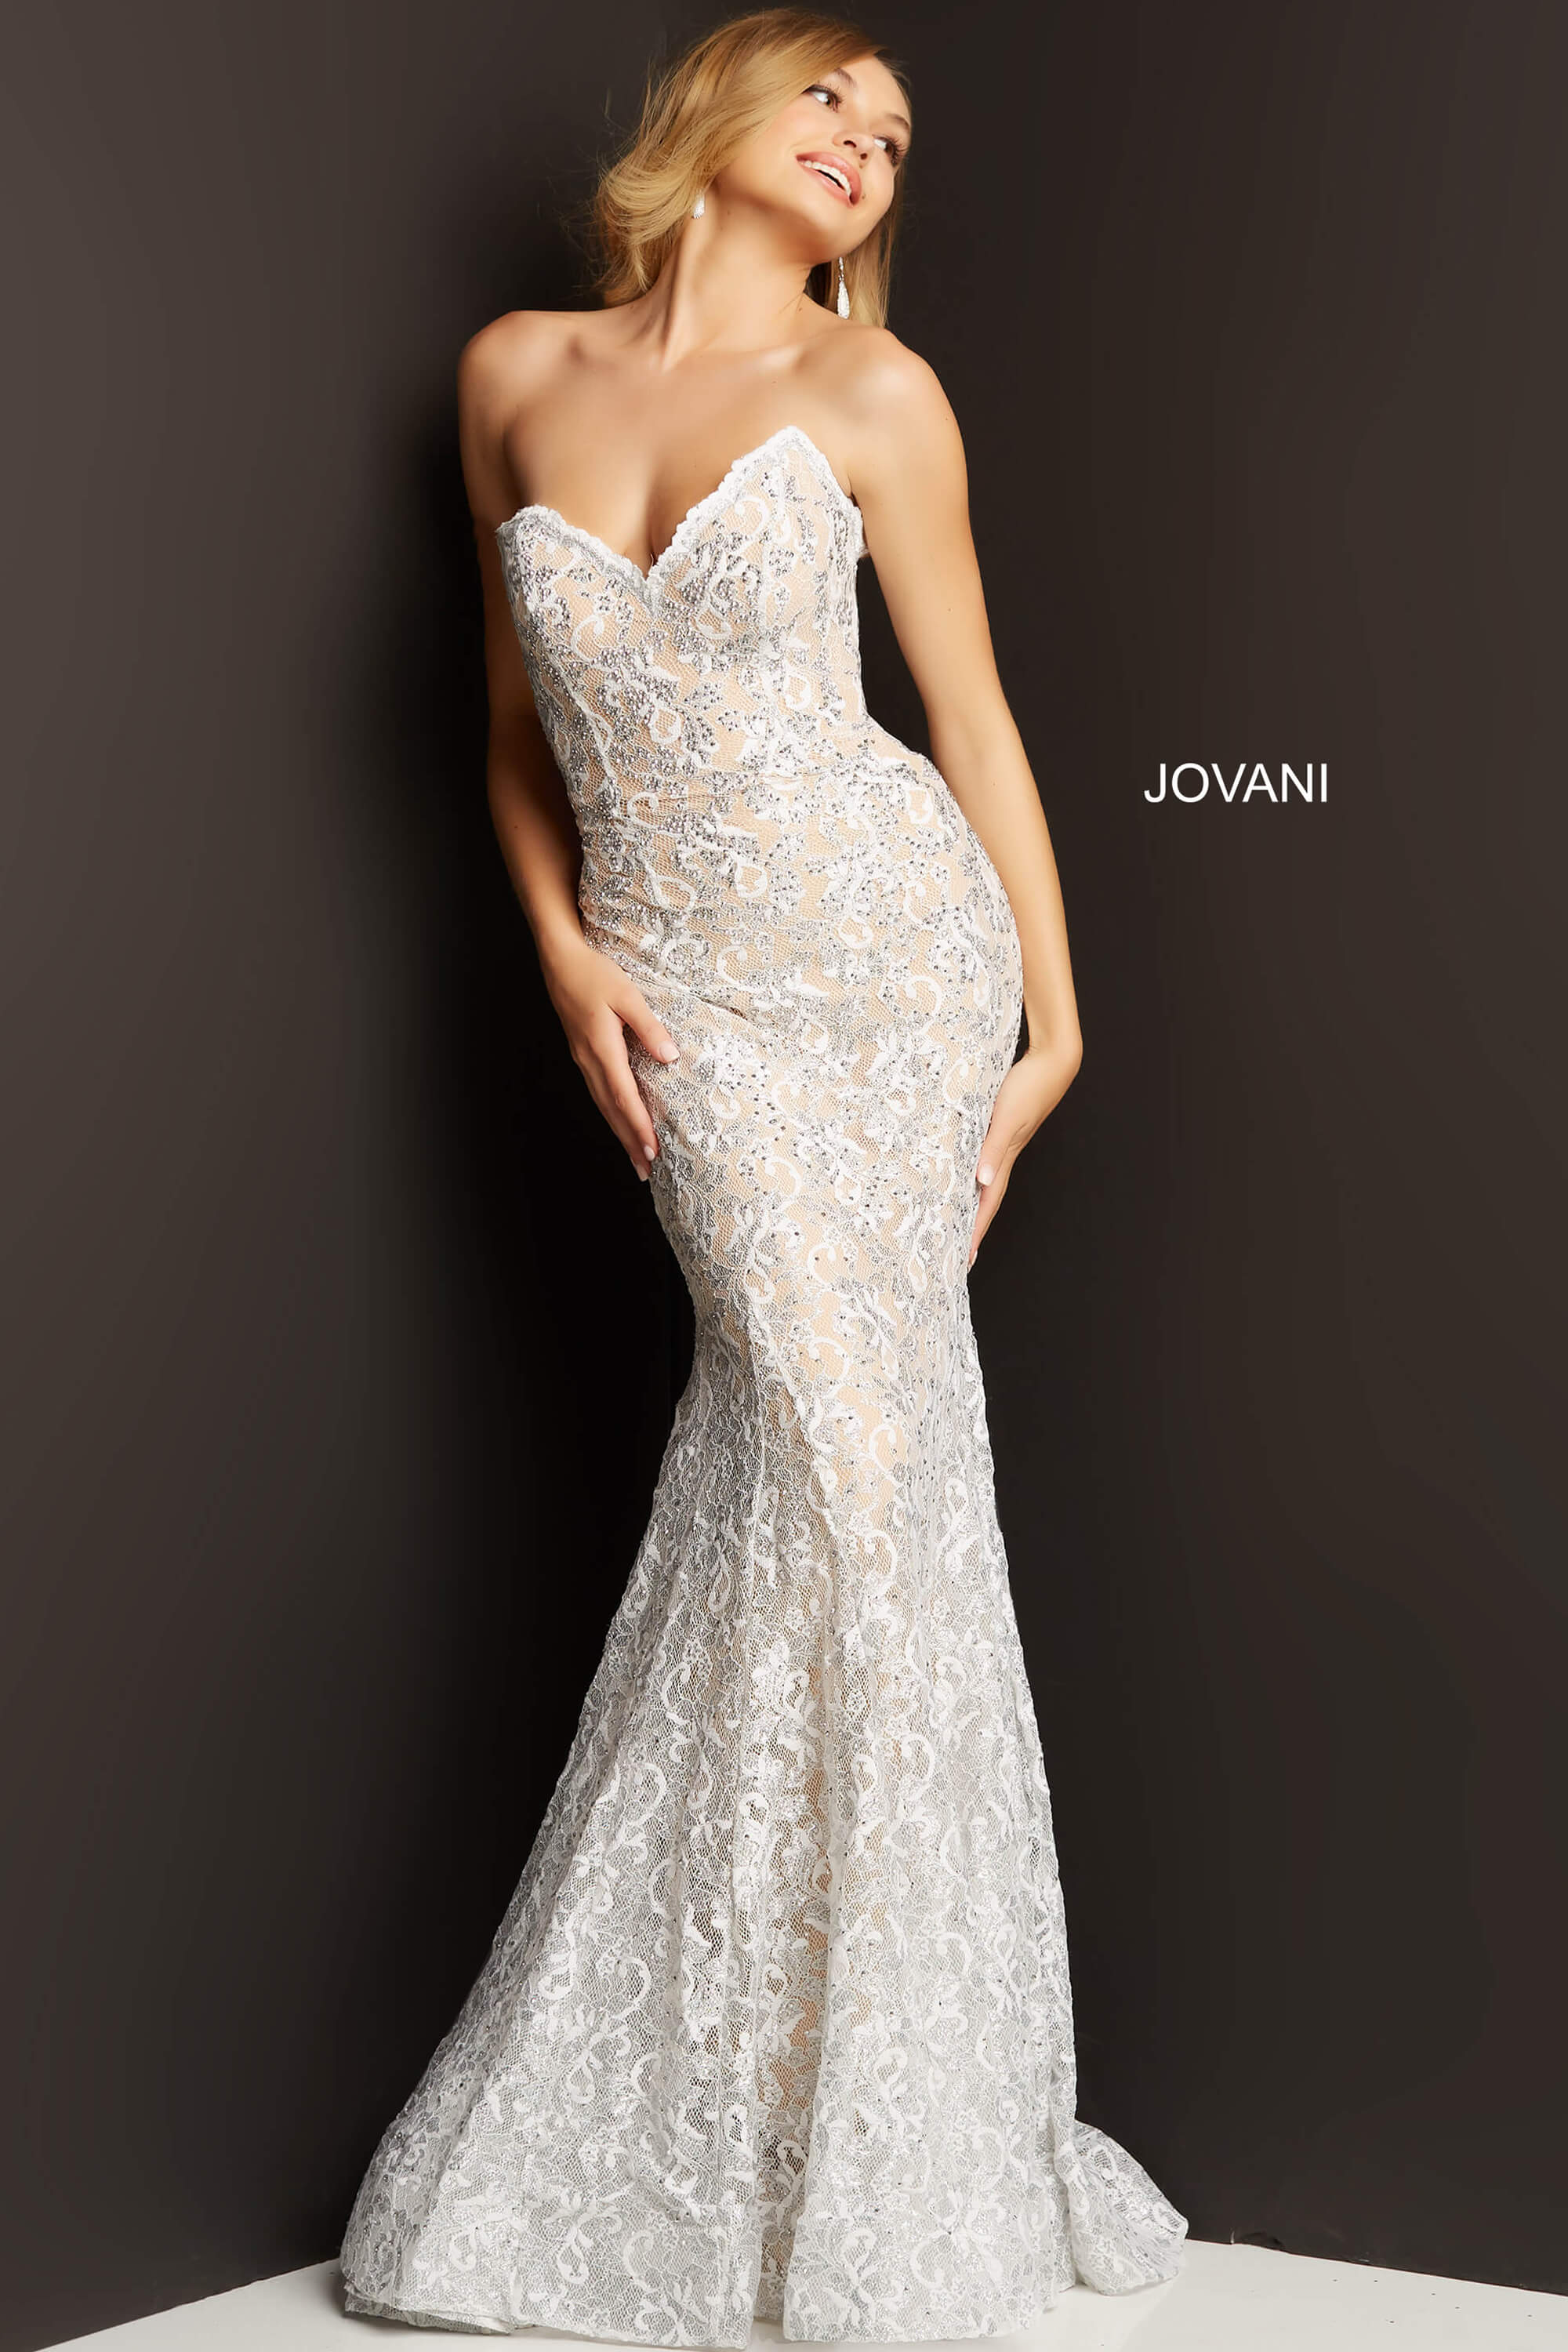 Embellished Lace Prom Dress By Jovani -08215